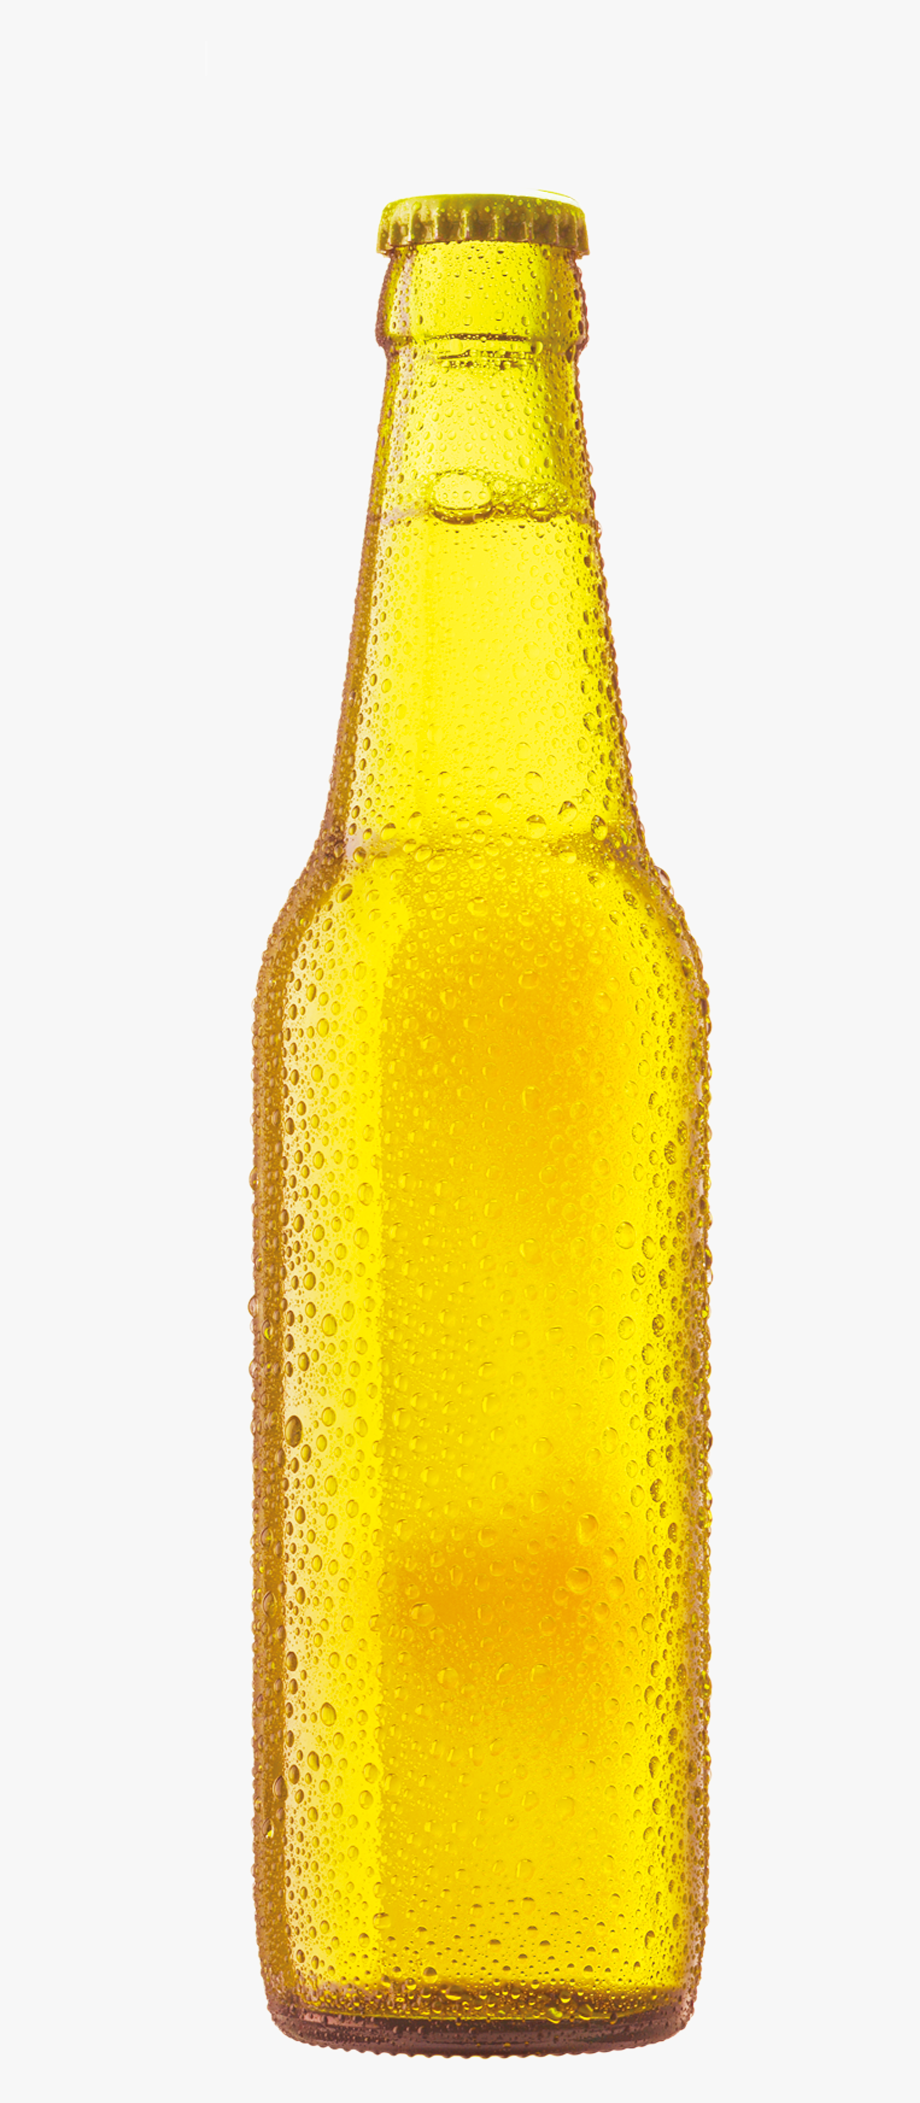 Желтая бутылочка. Бутылка без фона. Бутылка на прозрачном фоне.